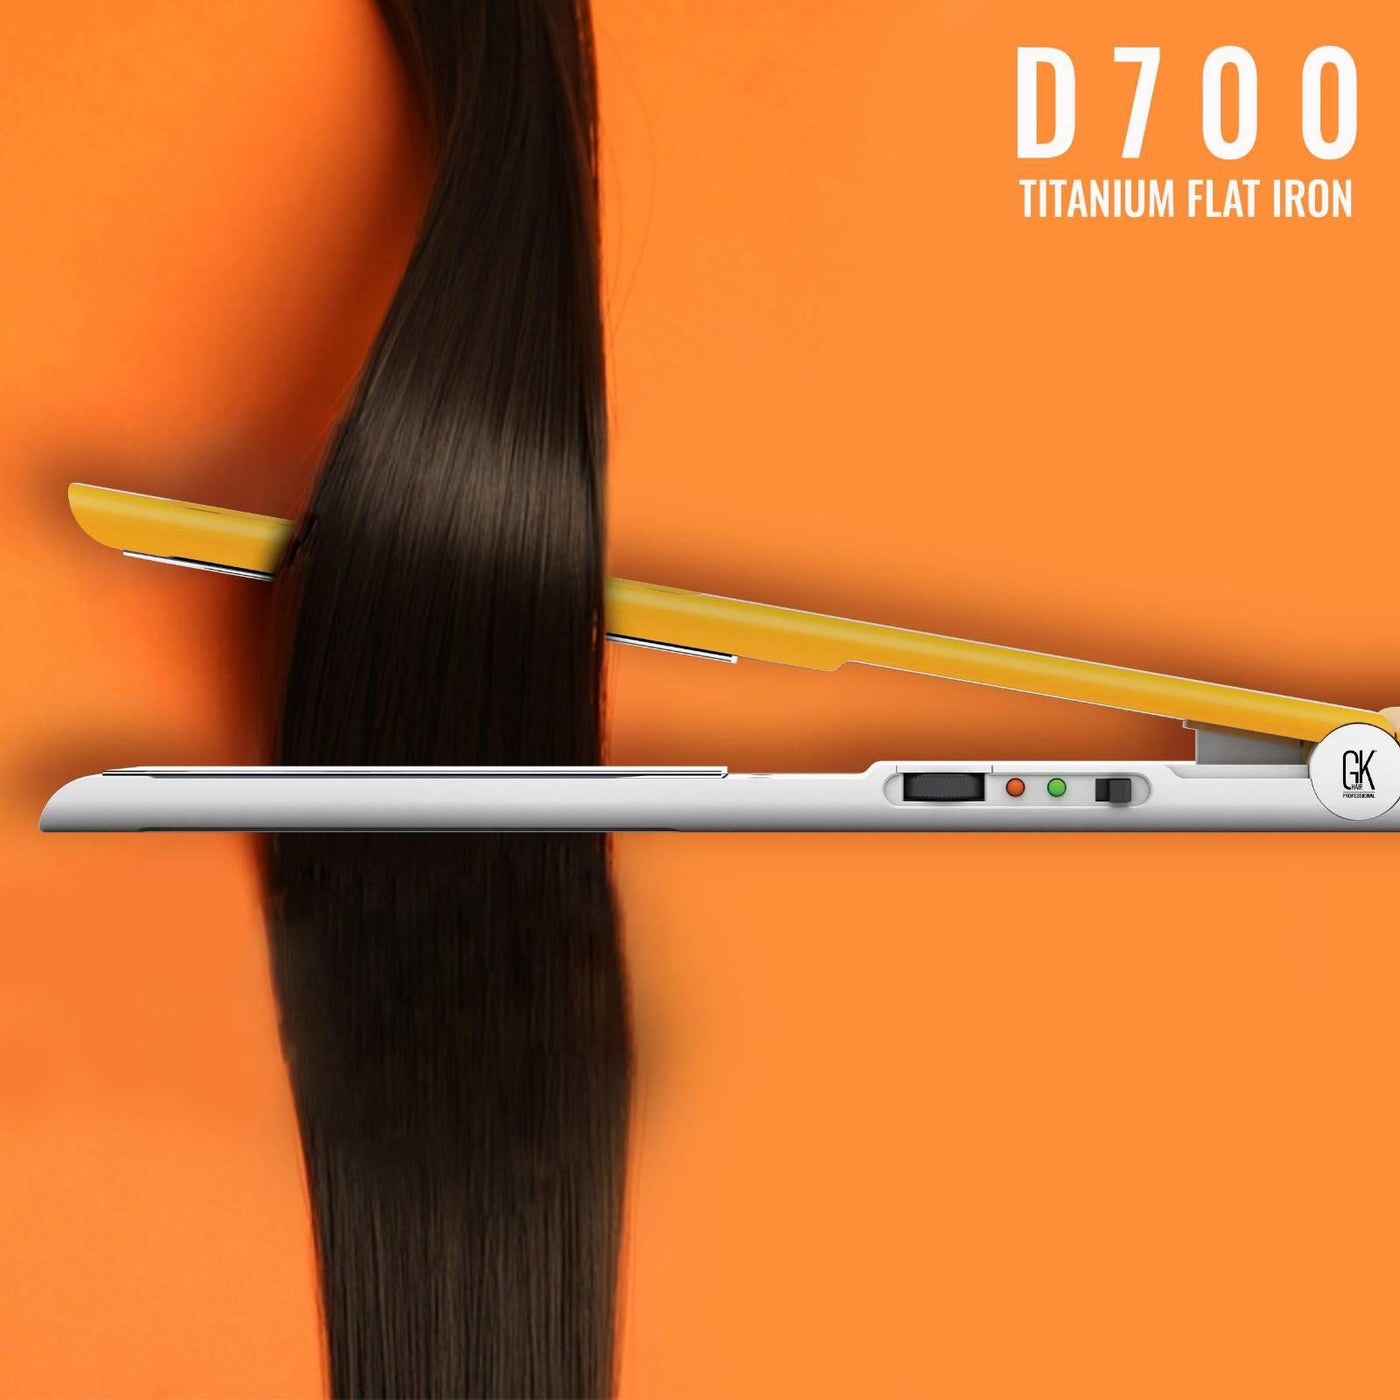 Titanium Flat Iron D700 | D700 Flat Iron GK Hair UAE